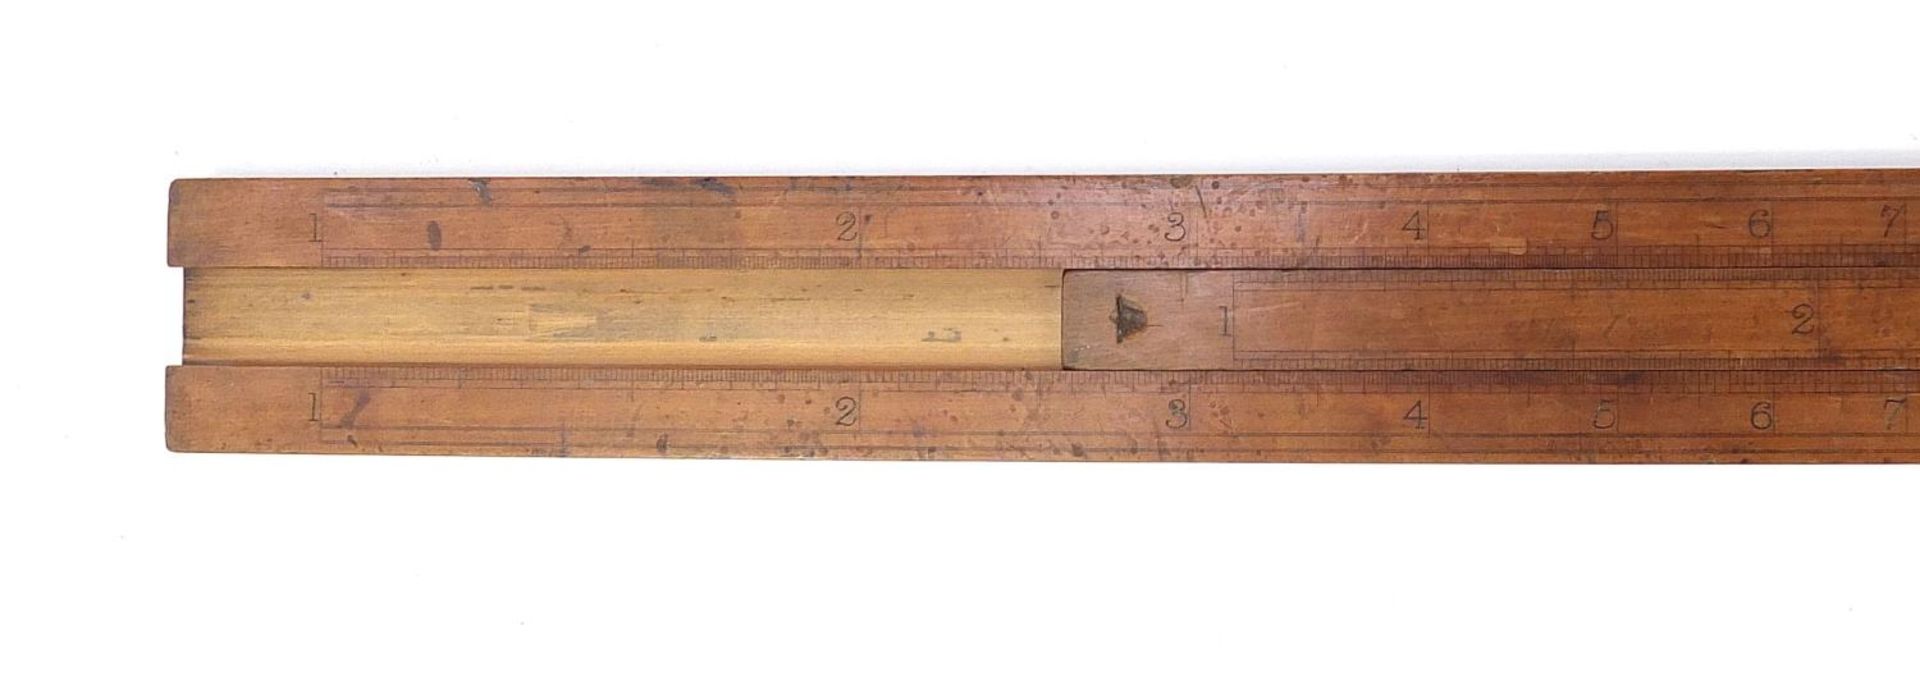 Antique Stanley boxwood three foot sliding rule impressed Stanley Great Turnstile Holborn London, - Image 6 of 14